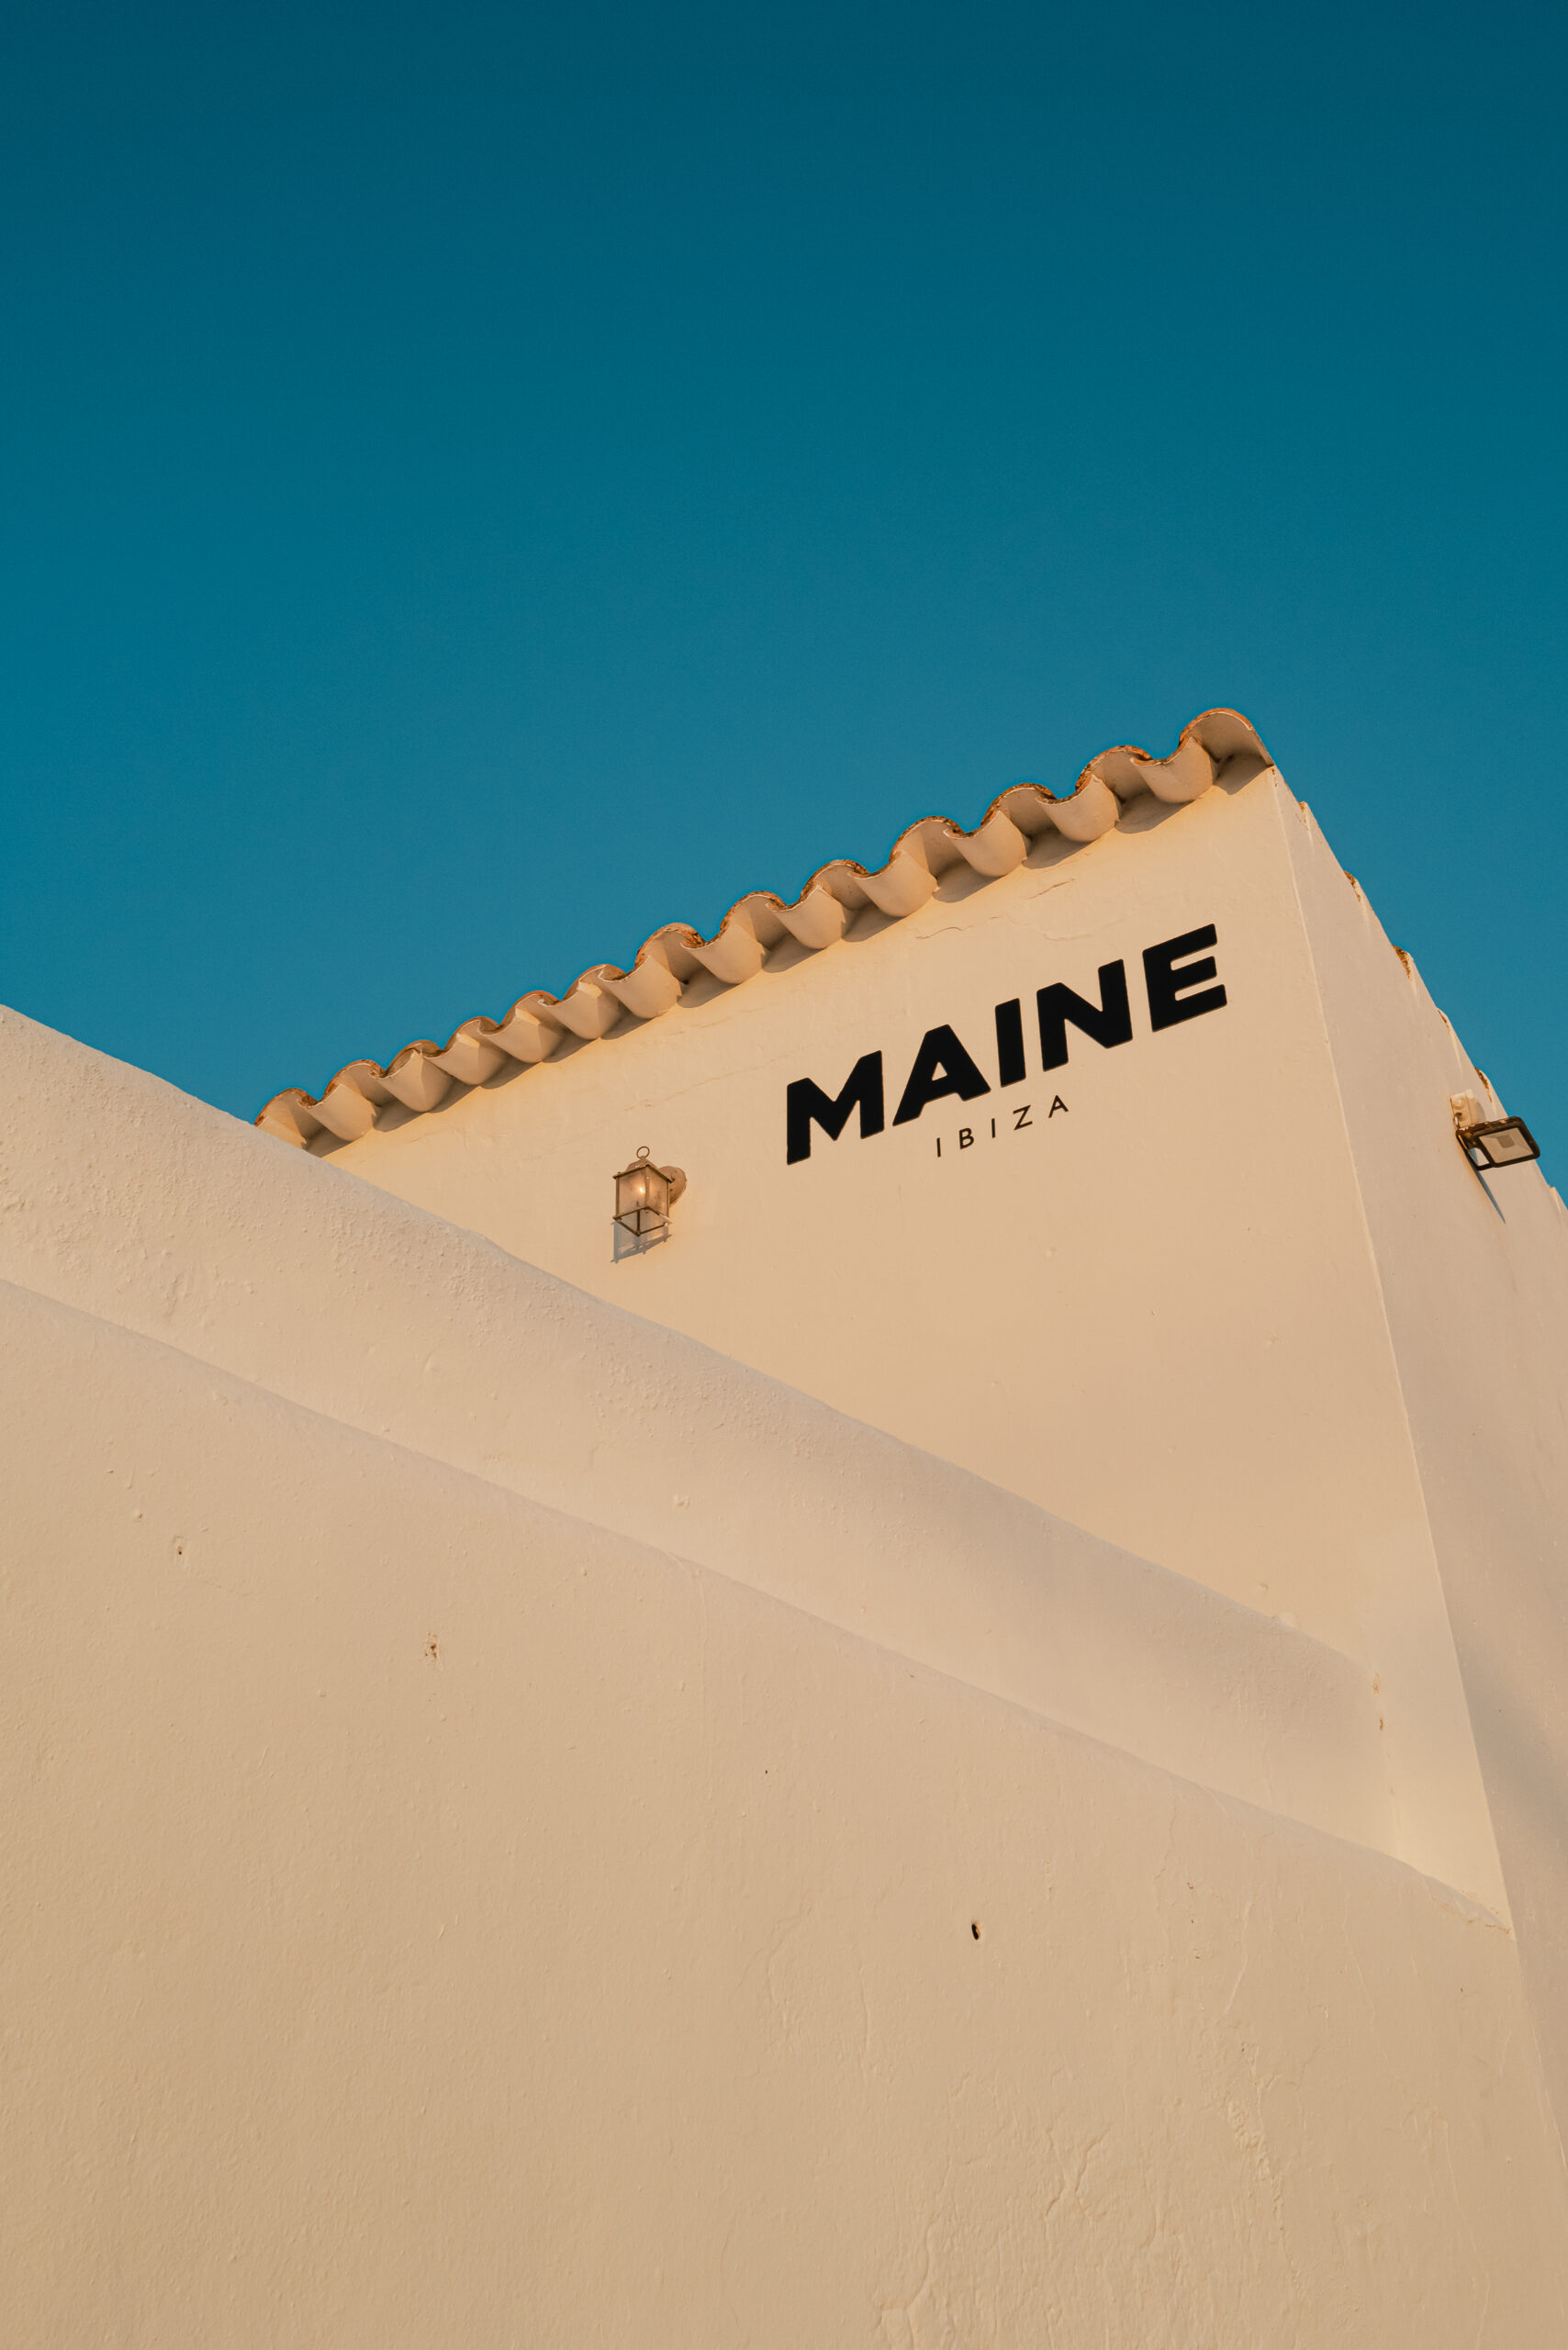 The Maine Ibiza sign